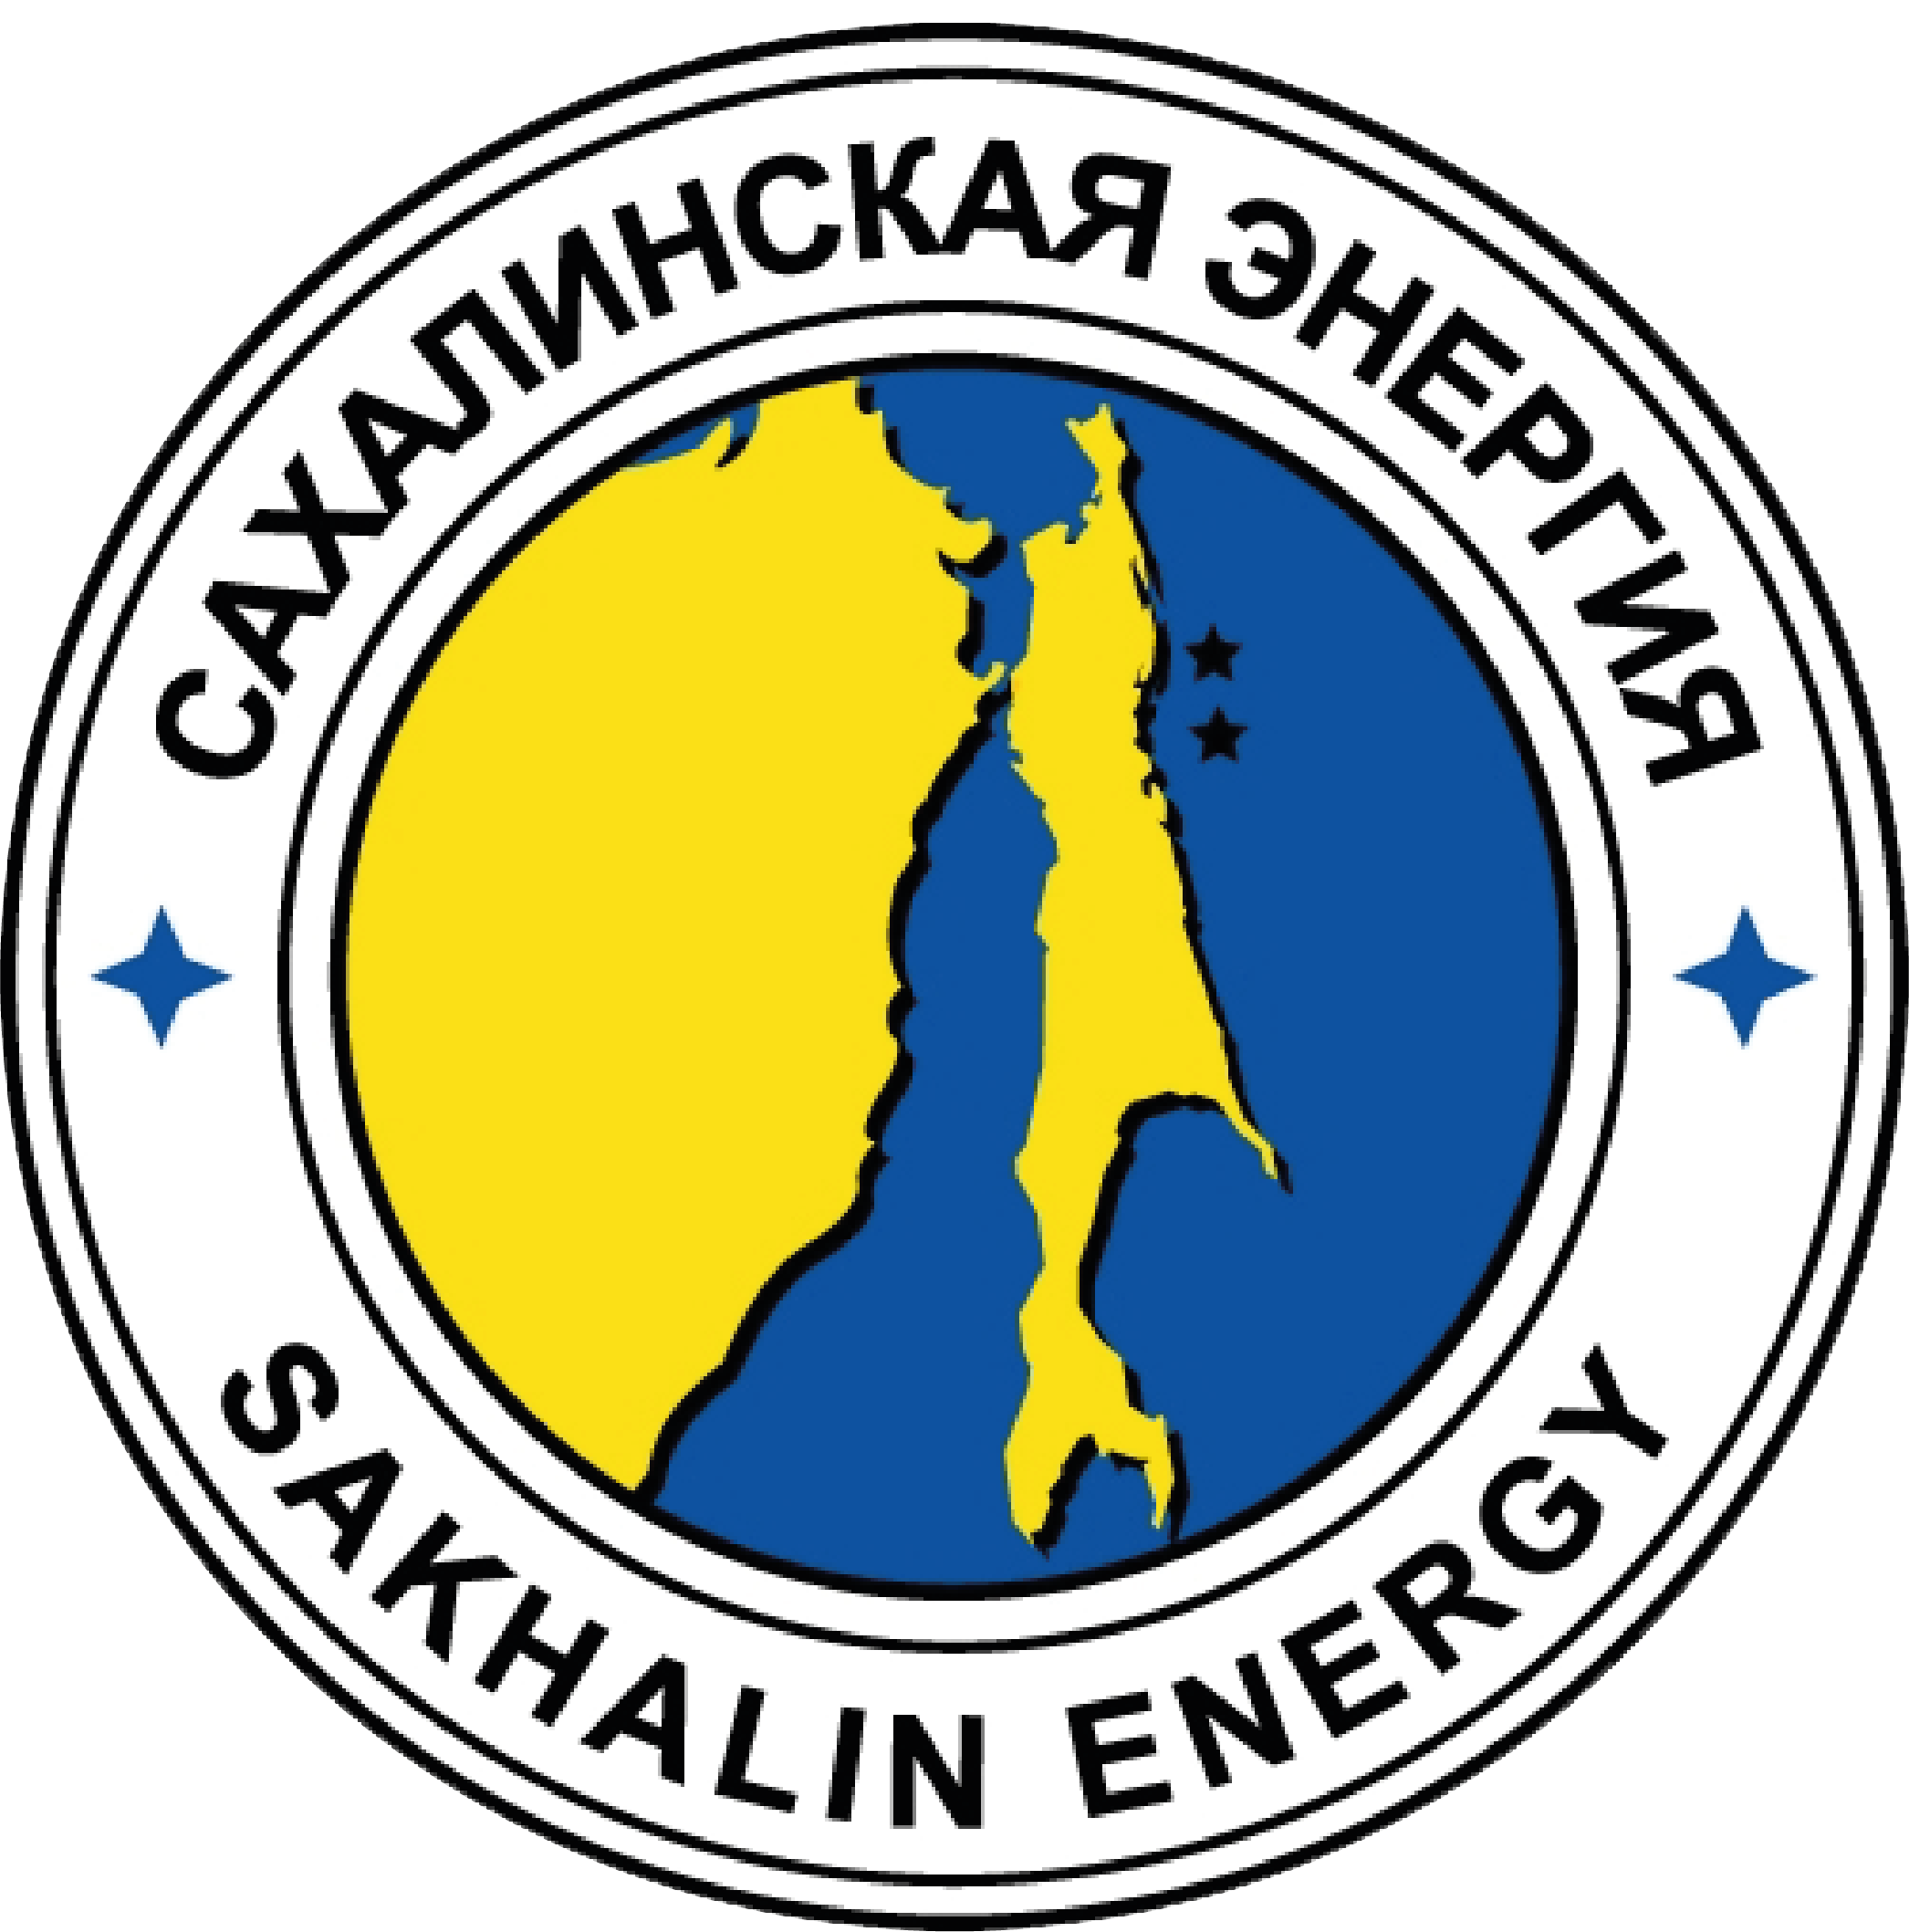 Сахалин Энерджи Инвестмент Компани - Sakhalin Energy Investment Company - Сахалинская энергия